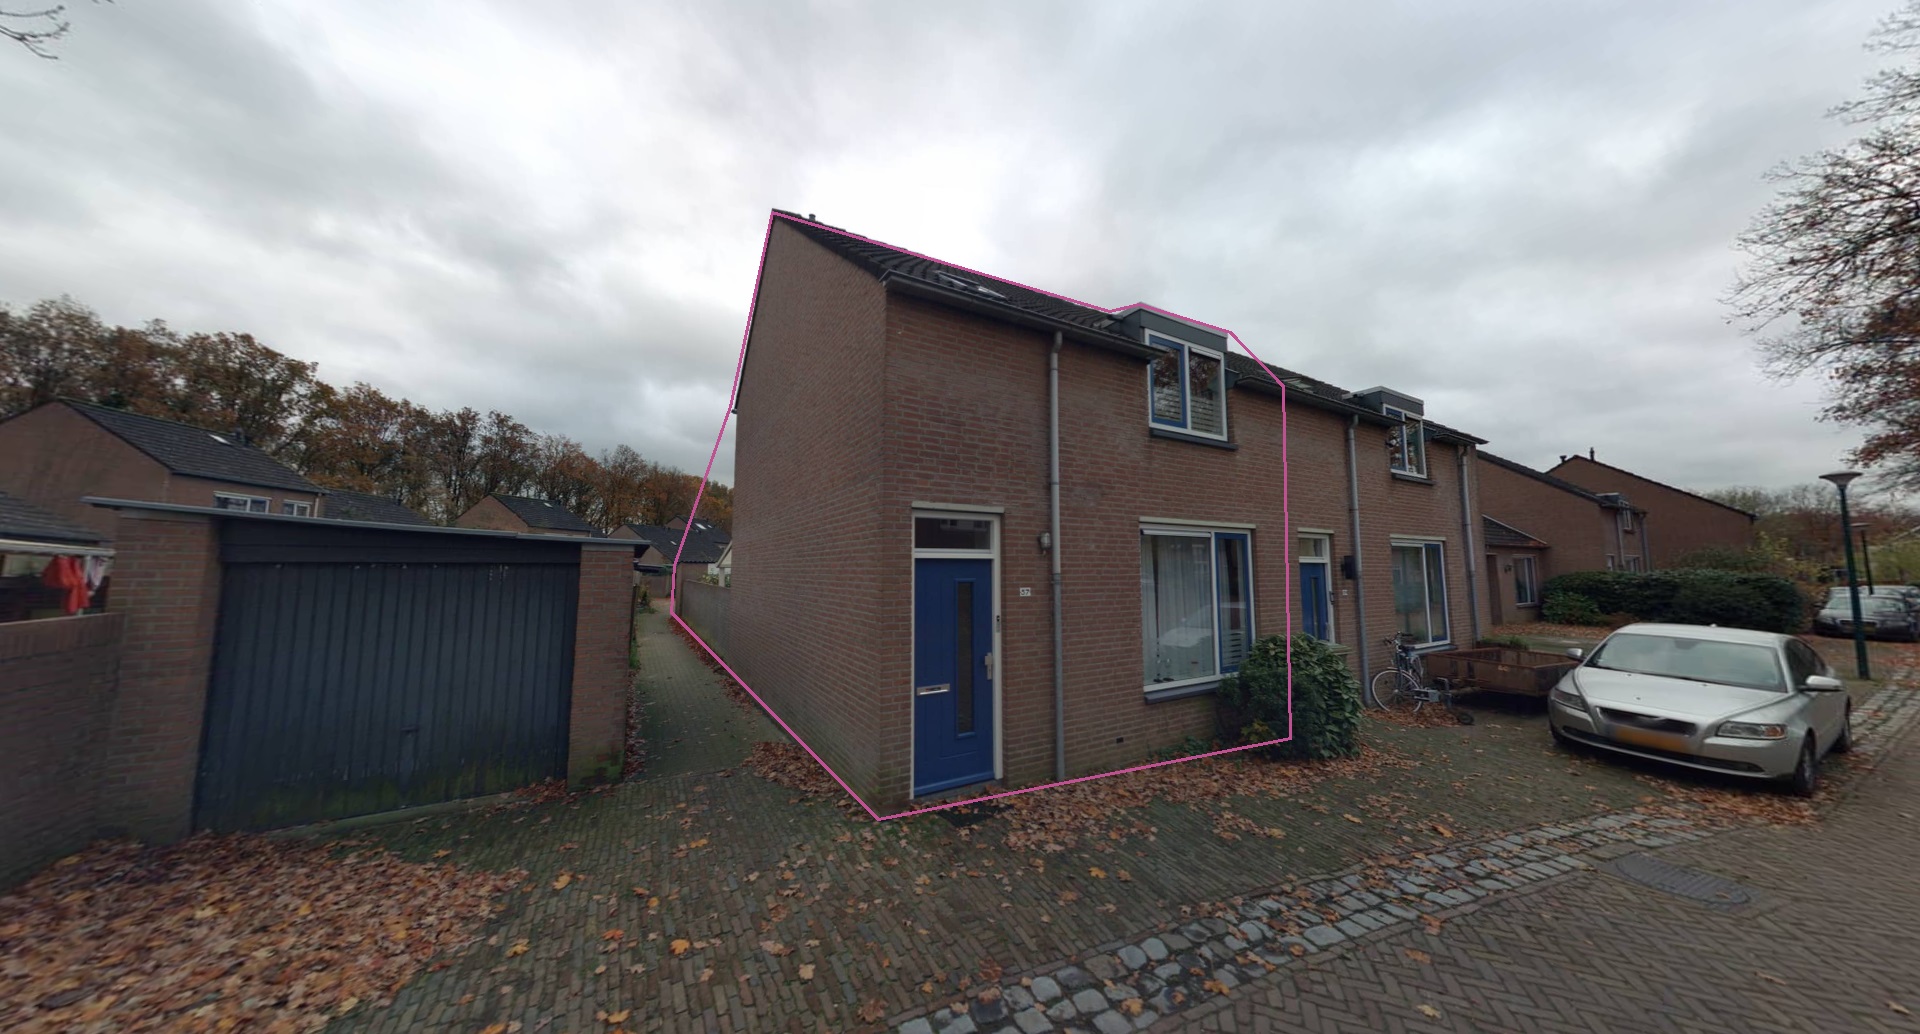 Kievitenveld 57, 5431 KS Cuijk, Nederland